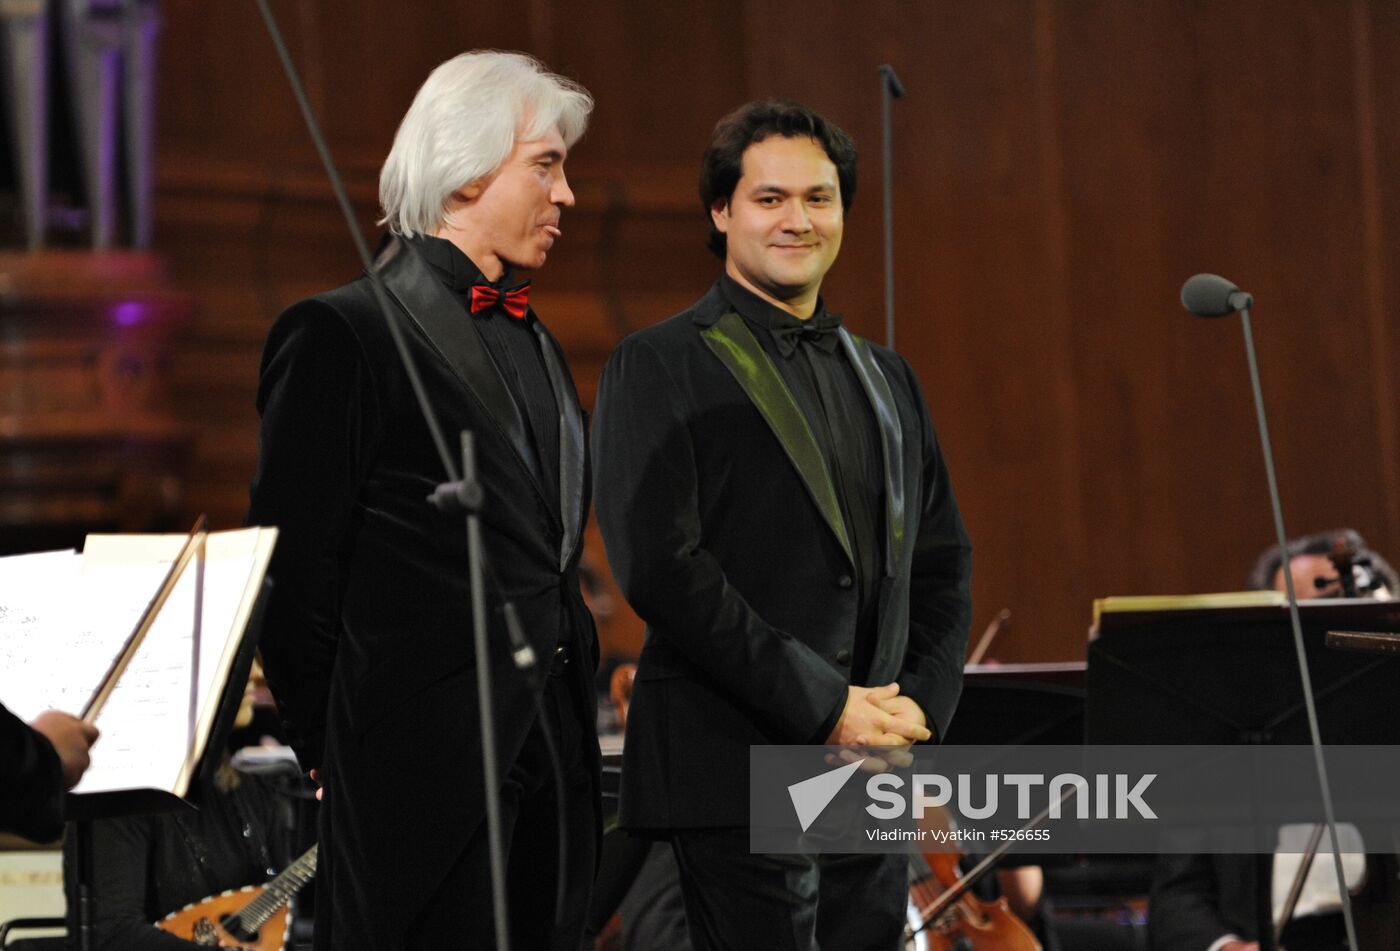 Dmitri Hvorostovsky gives concert at Moscow State Conservatory